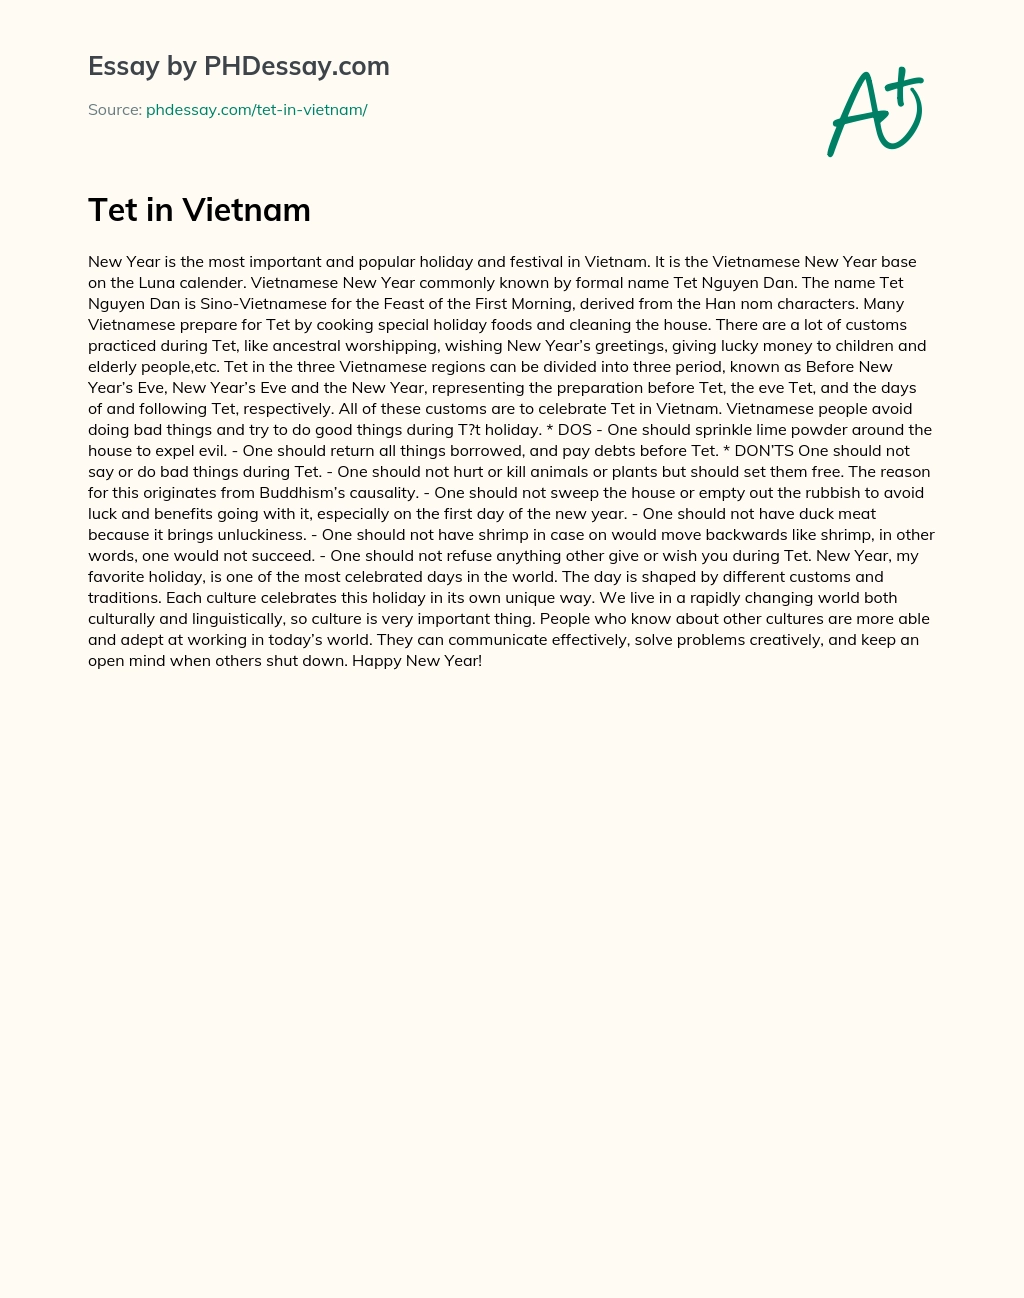 Tet in Vietnam essay